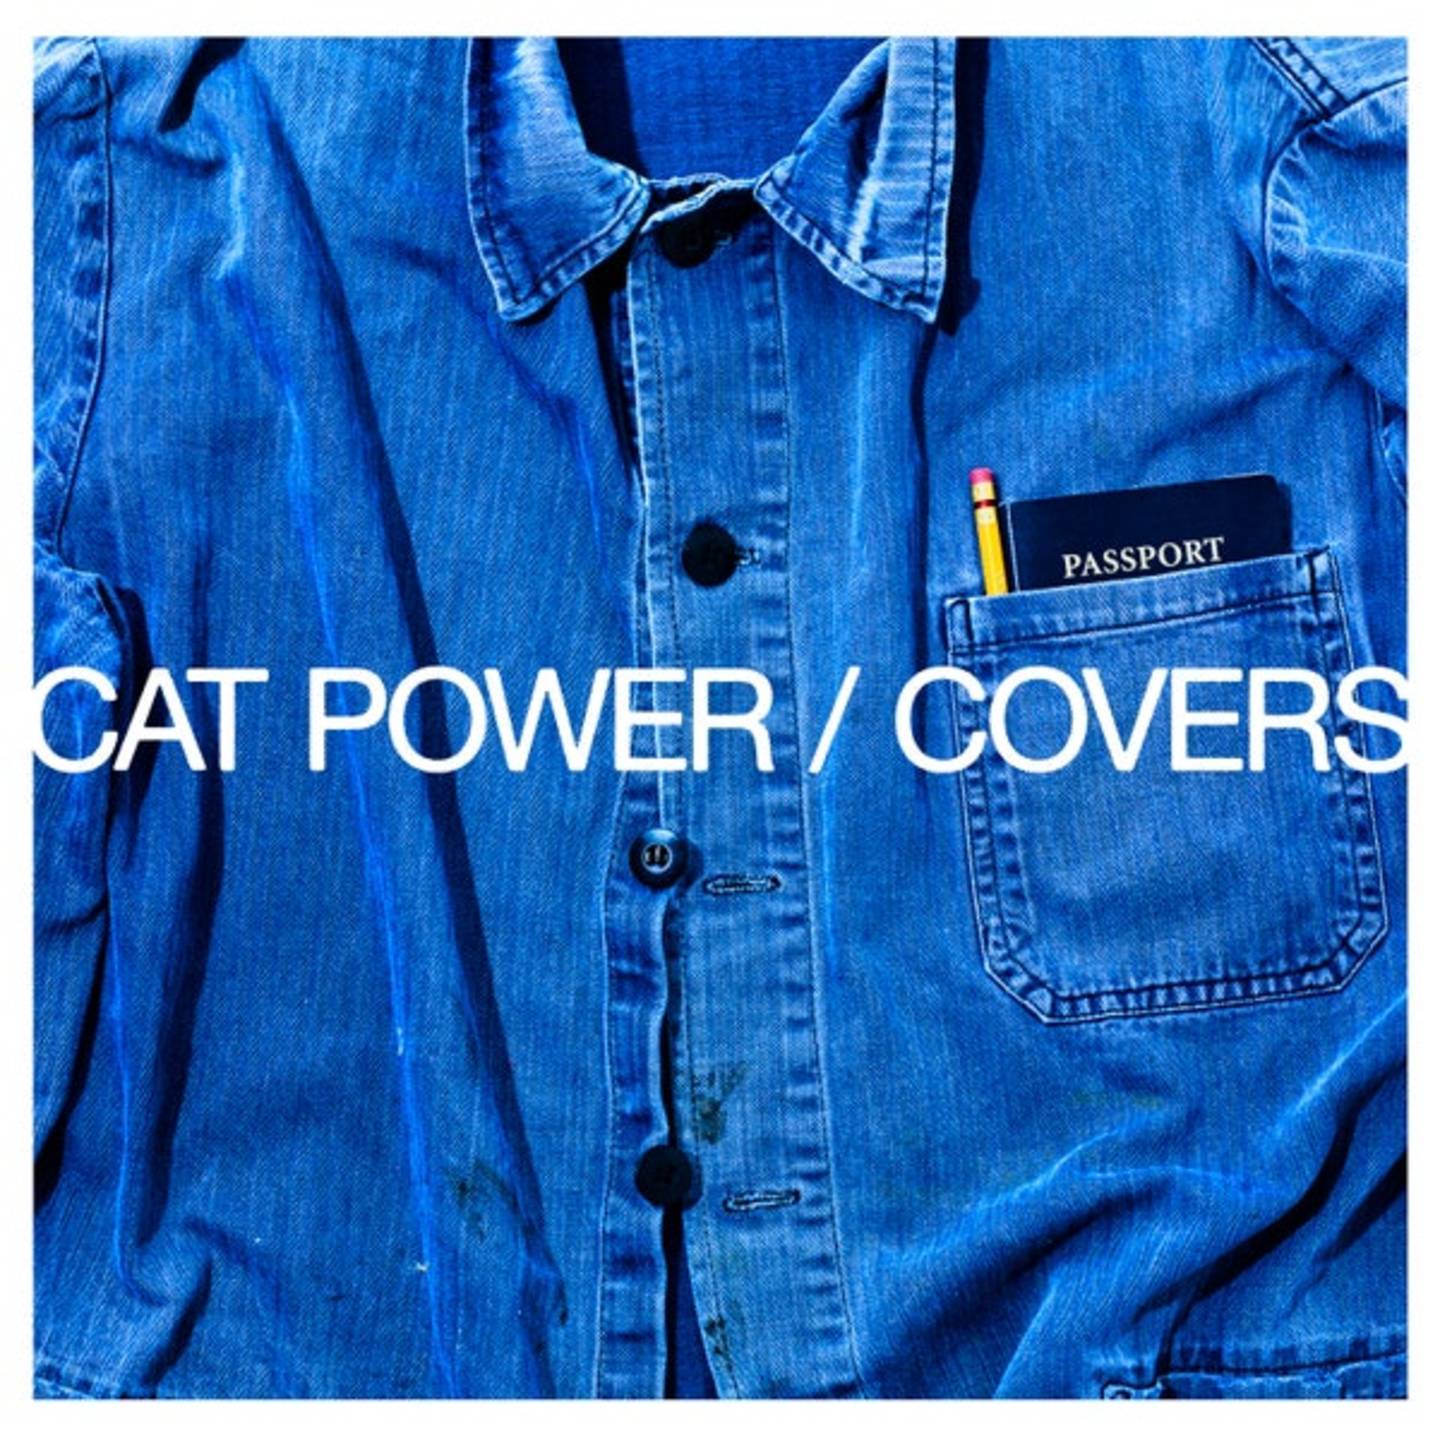 CAT POWER - Covers LP Indie Exclusive, Gold Vinyl